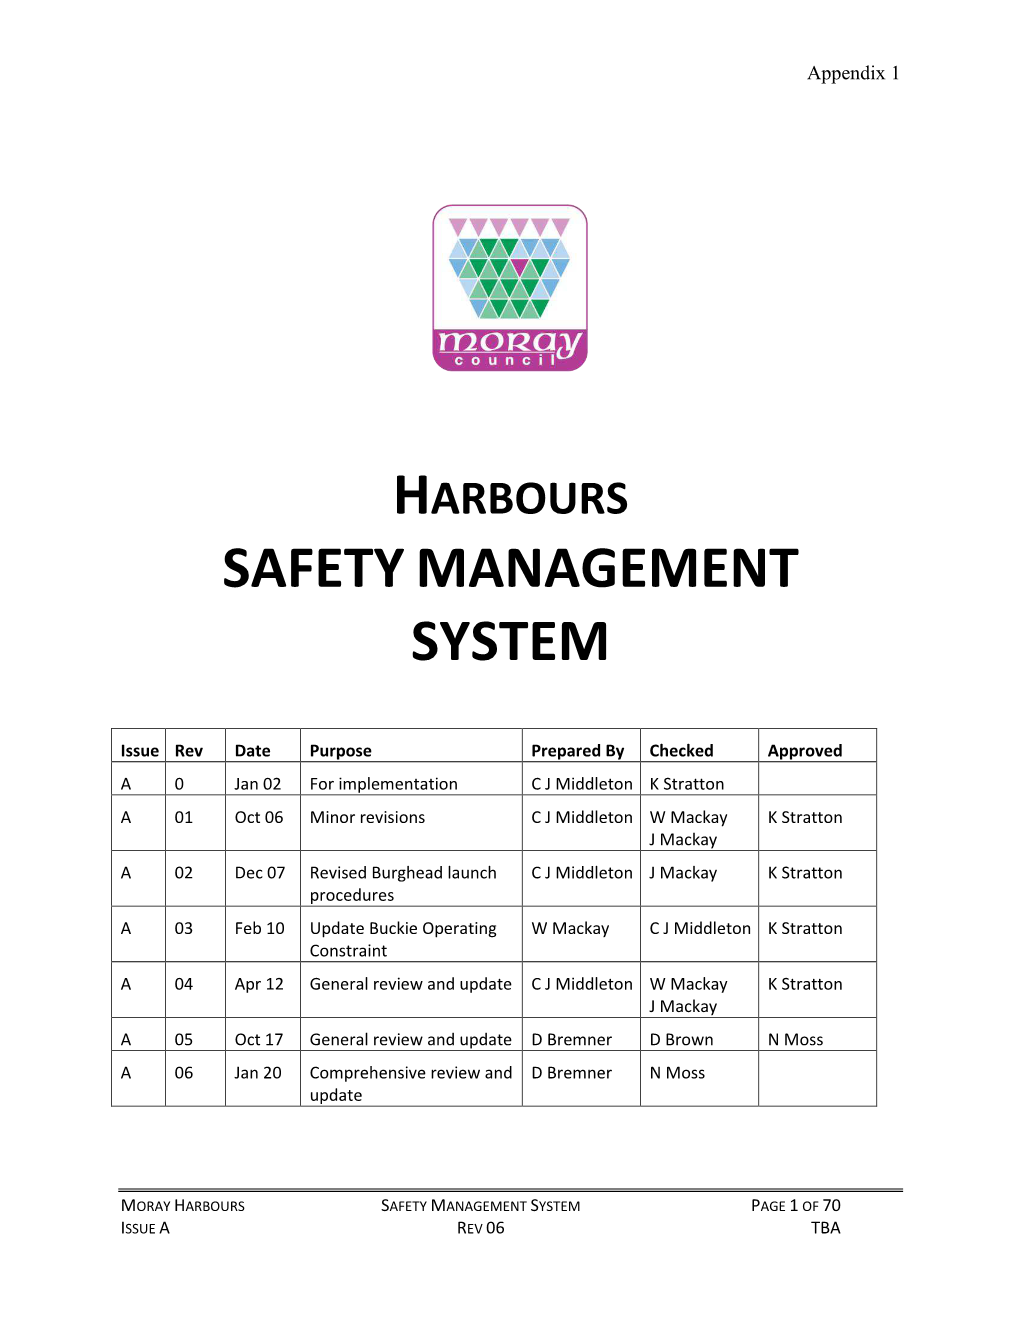 Harbour Safety Management System